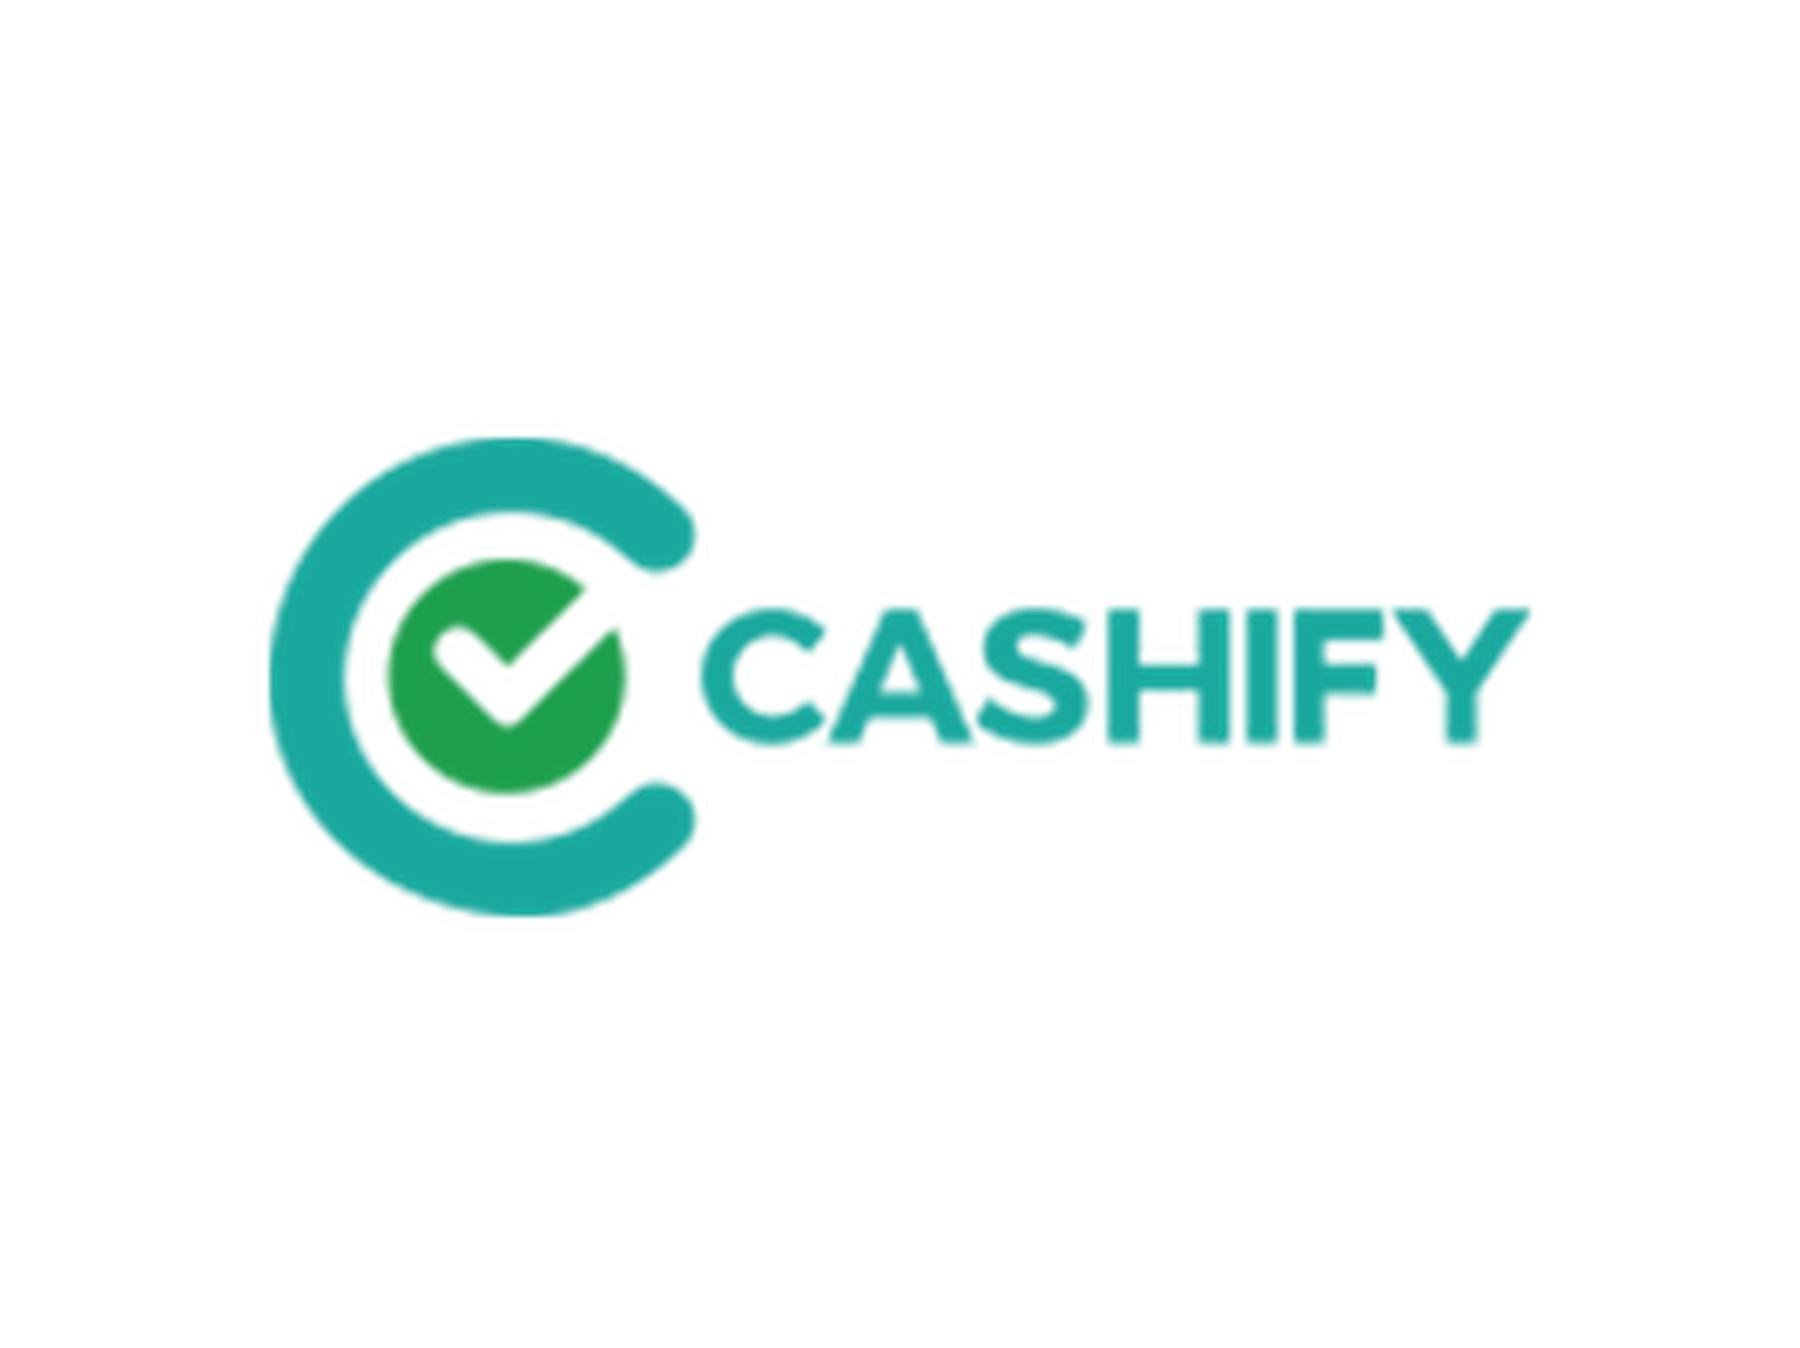 Cashify Promo Code